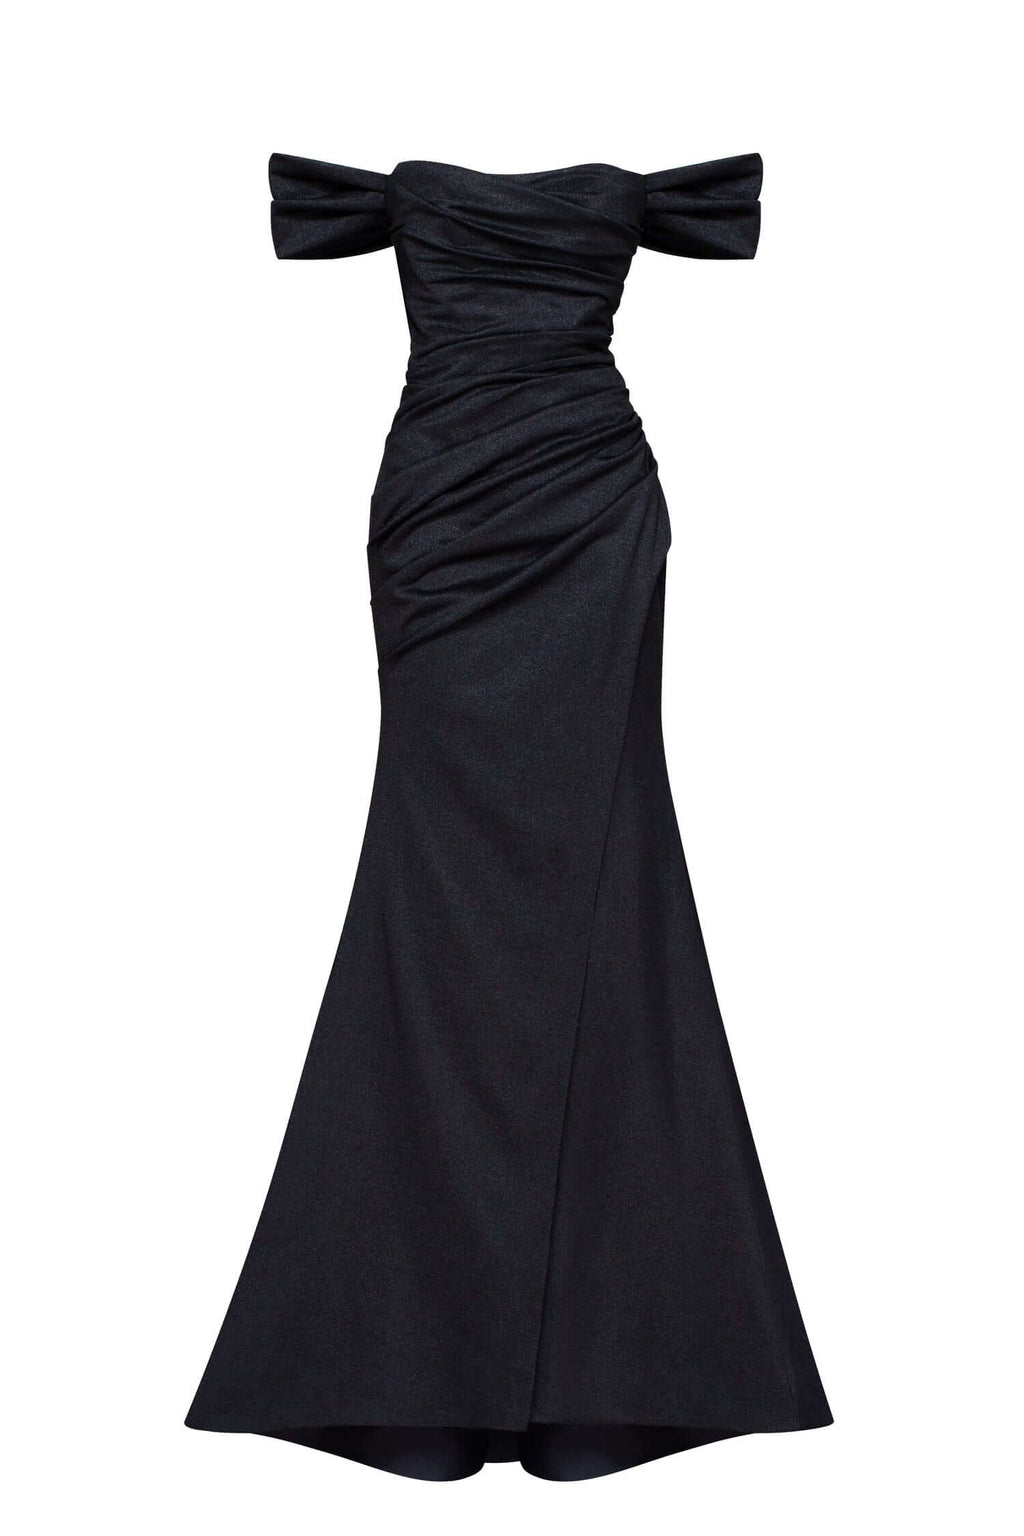 Classy black bodysuit, Xo Xo ➤➤ Milla Dresses - USA, Worldwide delivery